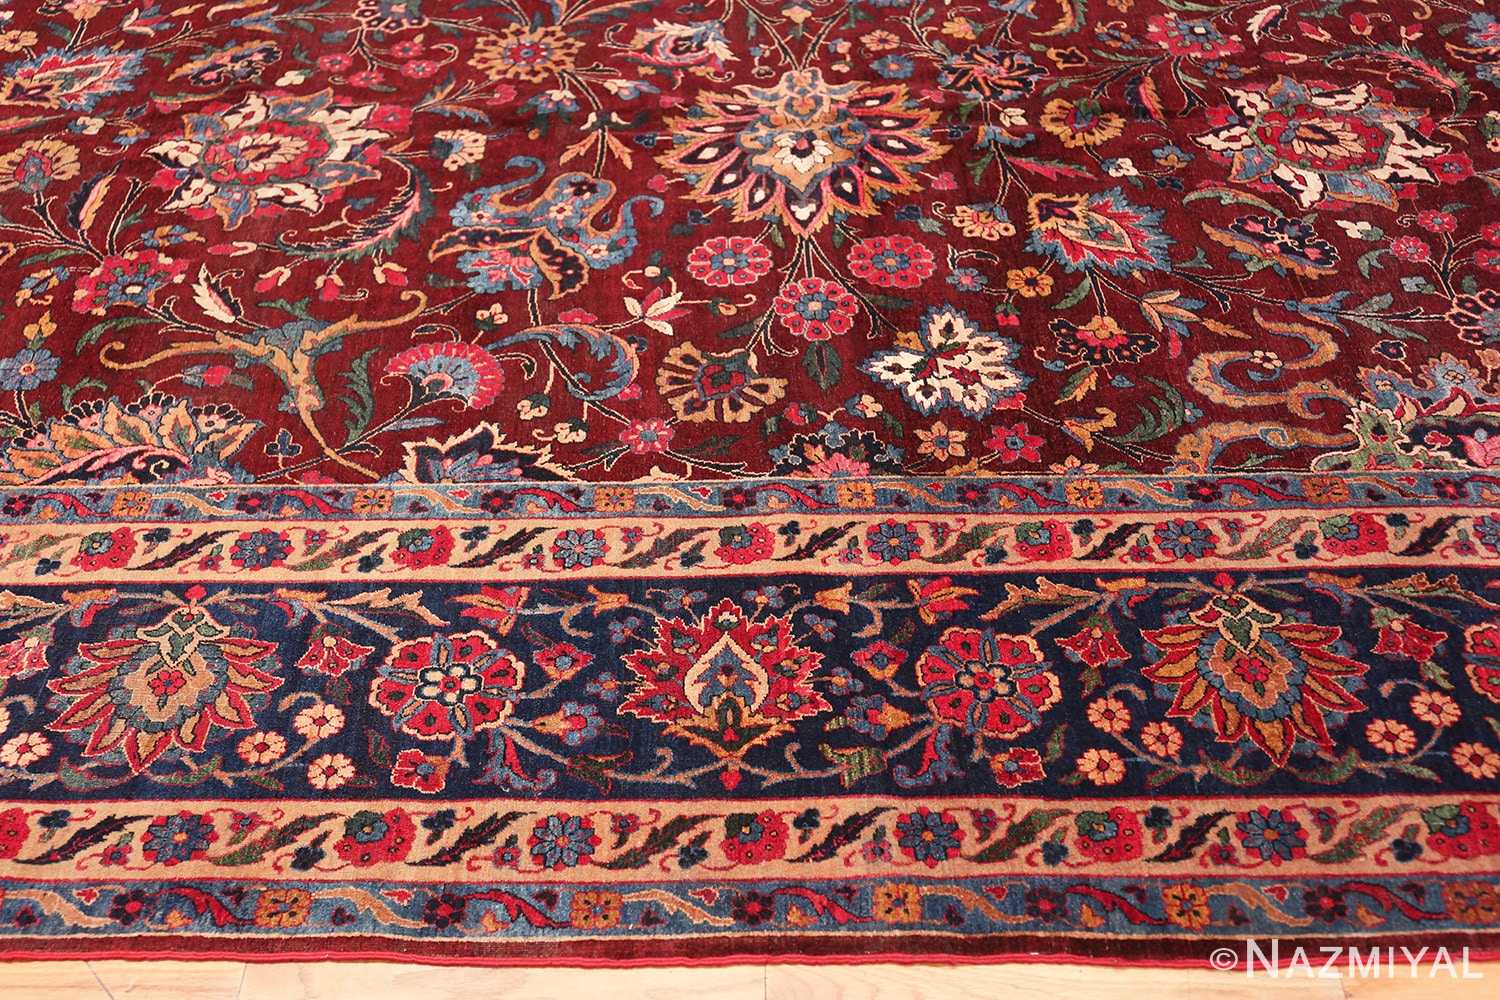 Border view Aubergine Antique Persian Kerman rug 44830 by Nazmiyal